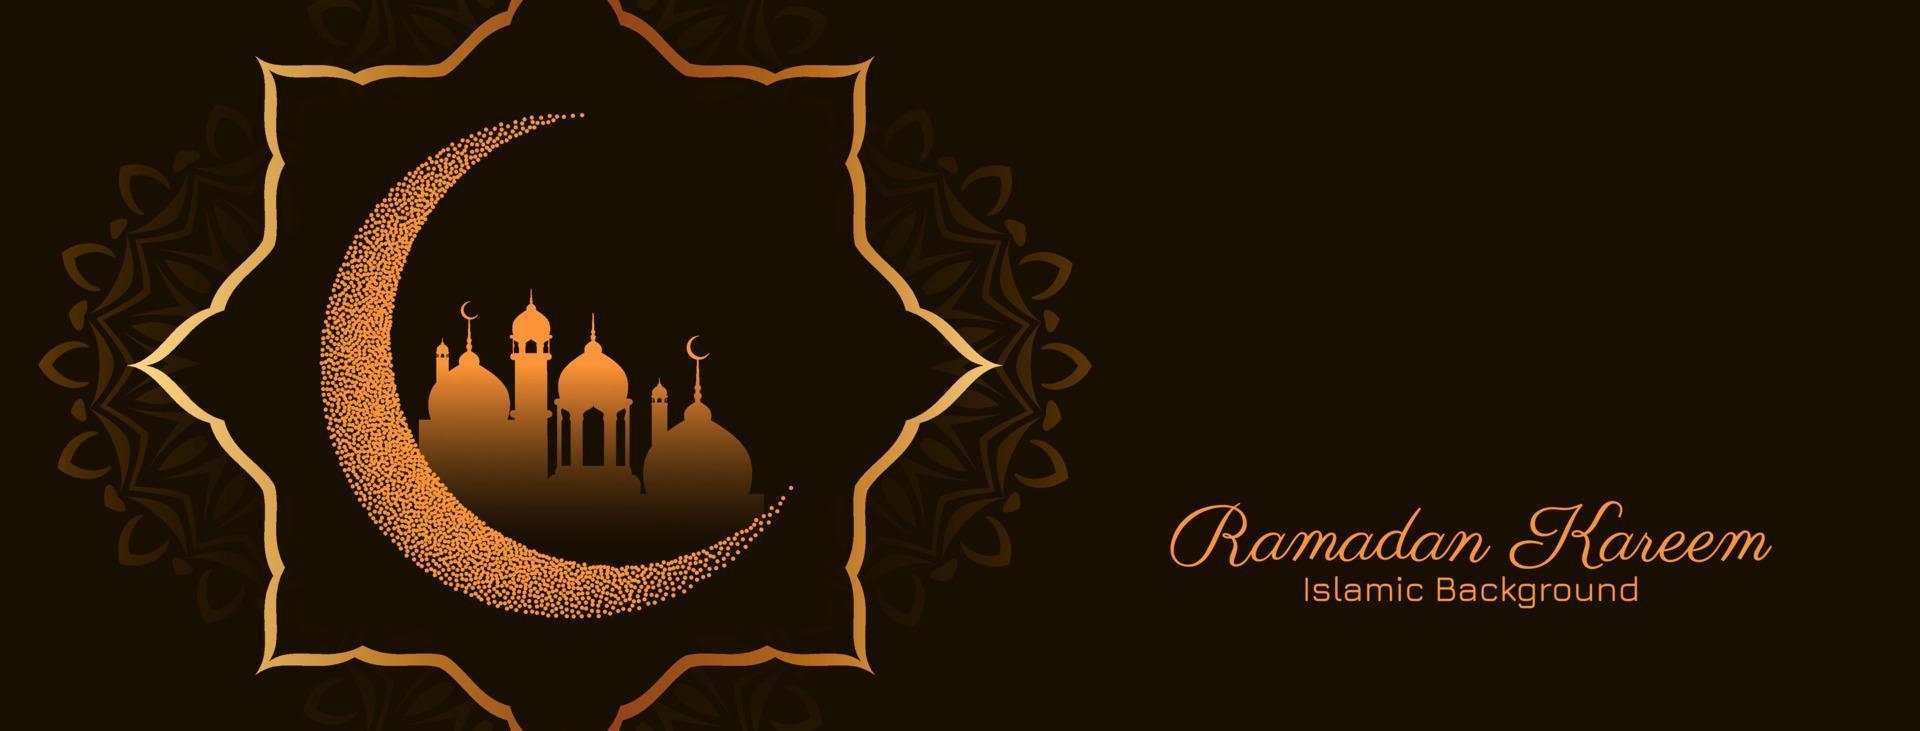 ramadan kareem islamisk traditionell festivalbannerdesign vektor